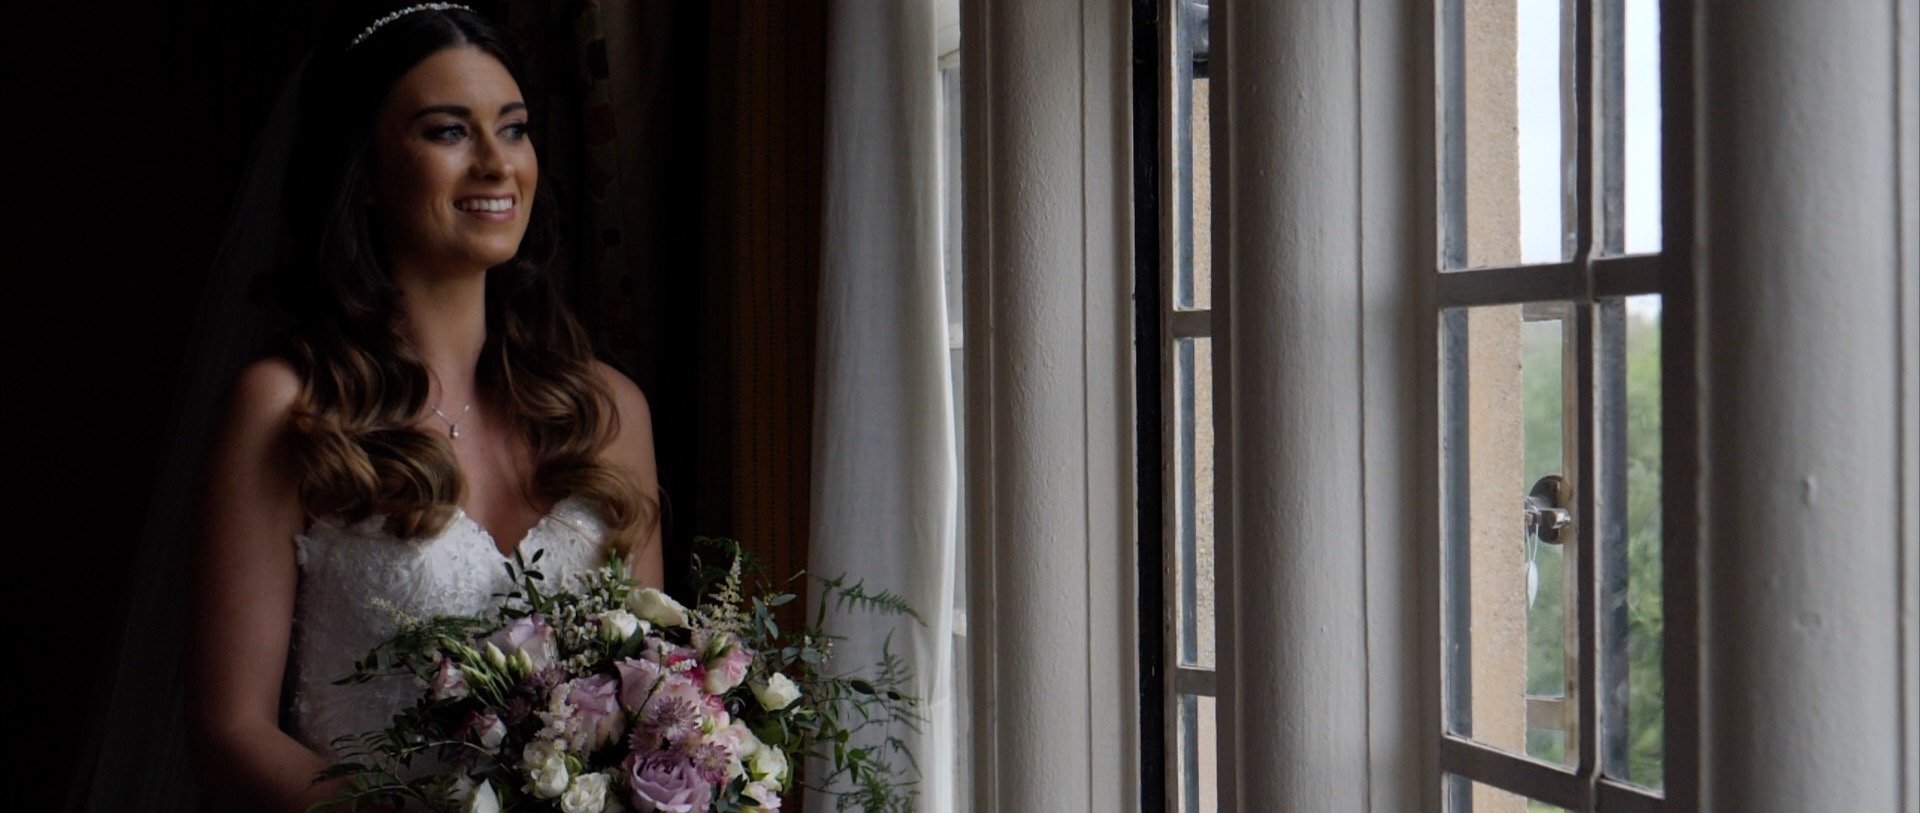 Beautiful bride at window Essex videos.jpg